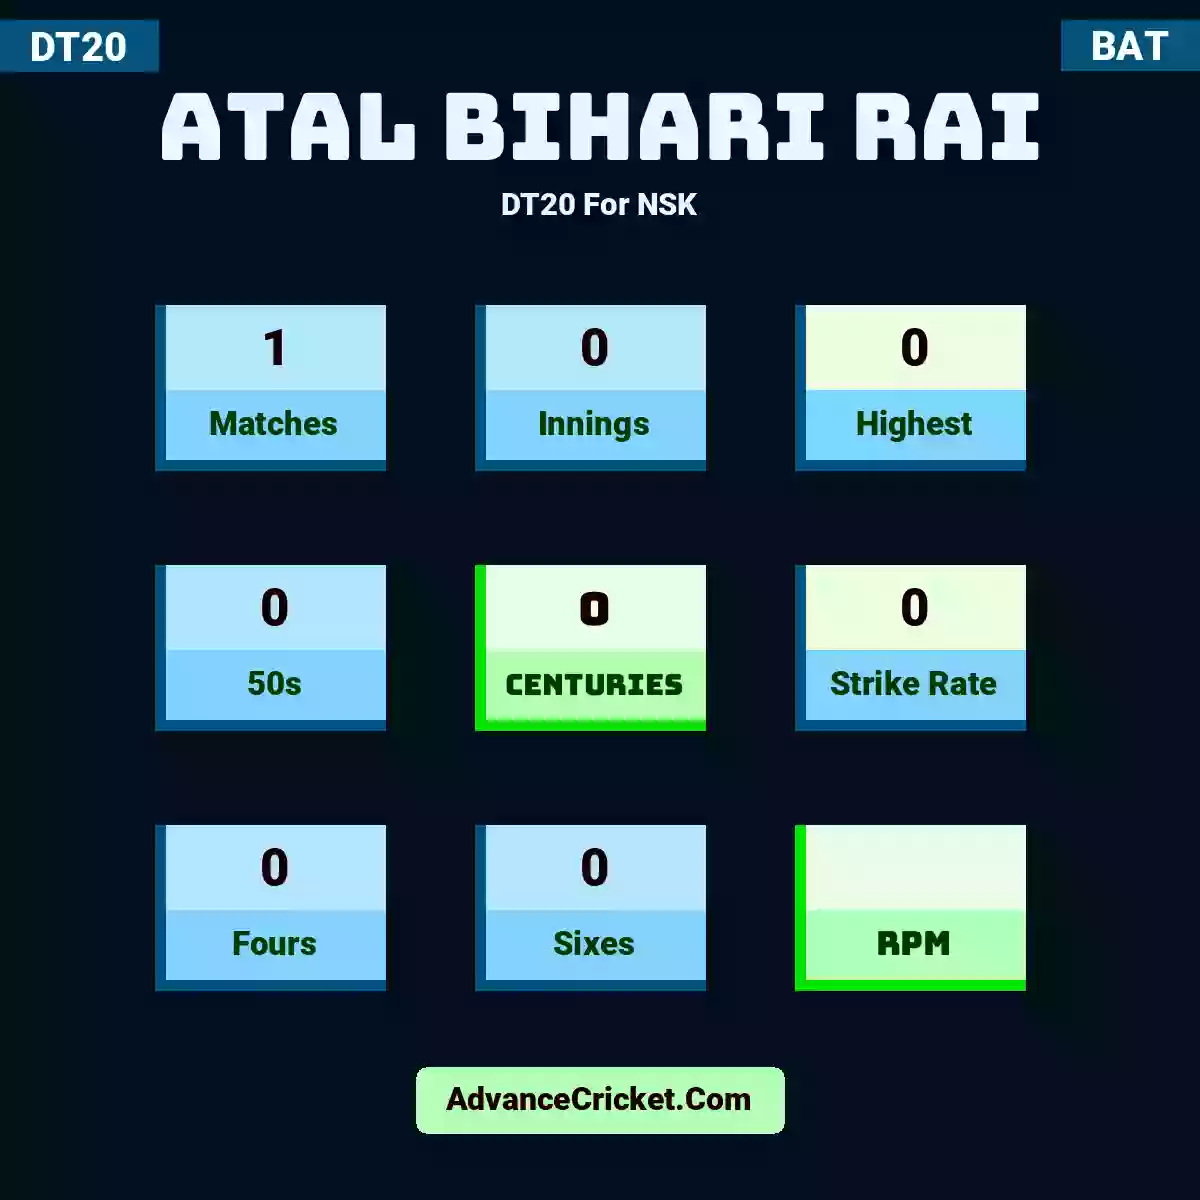 Atal Bihari Rai DT20  For NSK, Atal Bihari Rai played 1 matches, scored 0 runs as highest, 0 half-centuries, and 0 centuries, with a strike rate of 0. A.Rai hit 0 fours and 0 sixes.